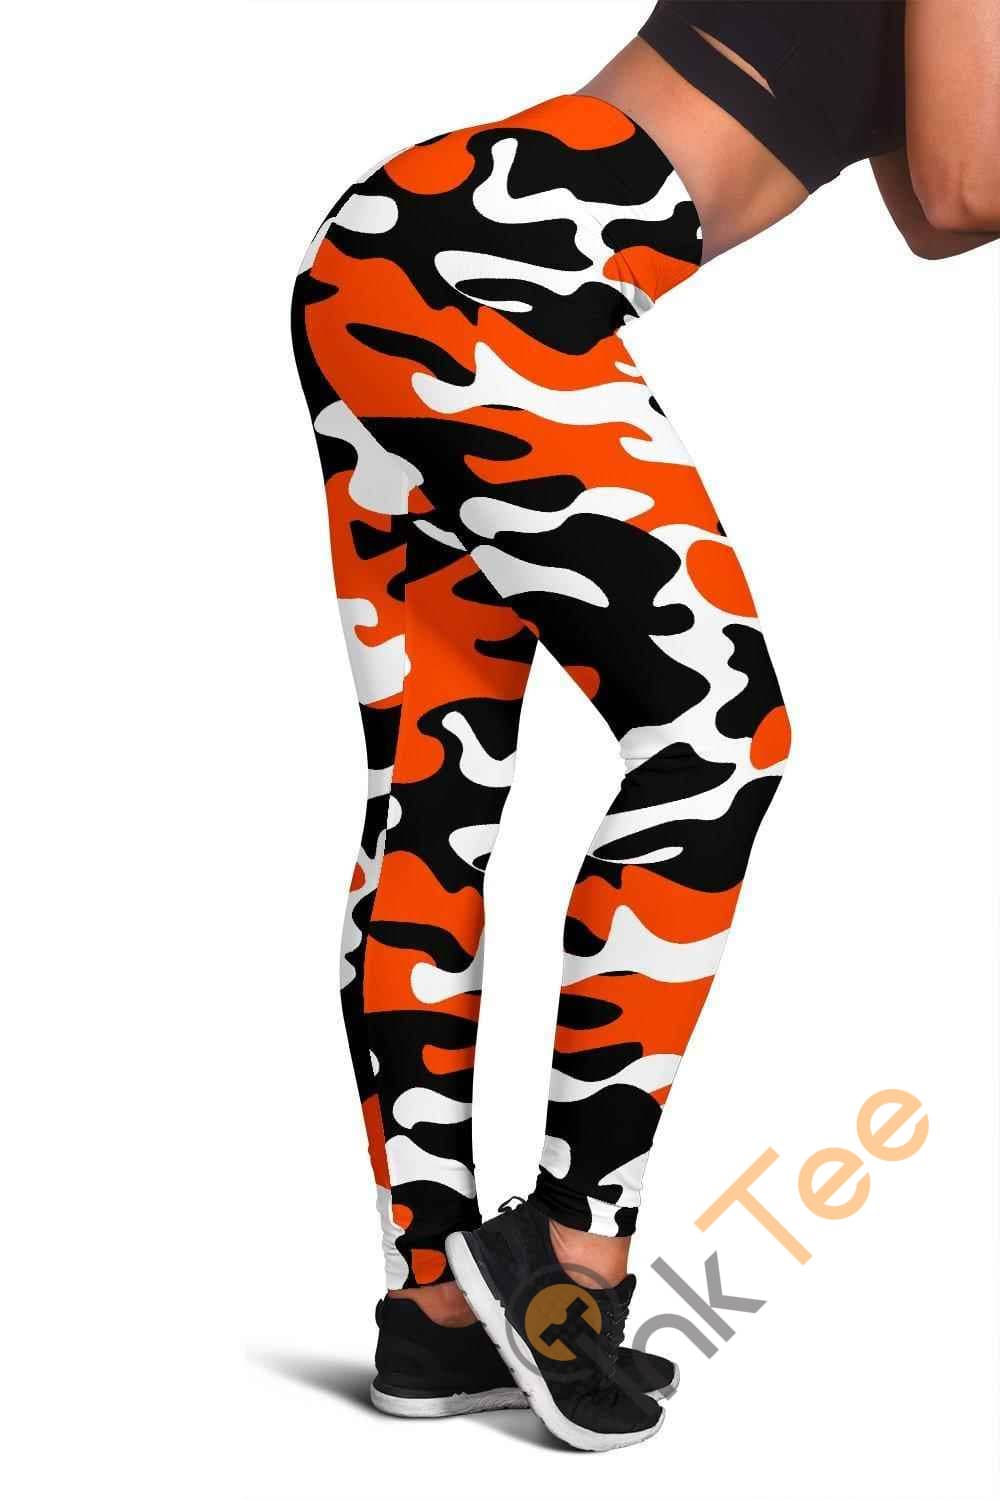 Inktee Store - Cincinnati Bengals Inspired Tru Camo 3D All Over Print For Yoga Fitness Fashion Women'S Leggings Image